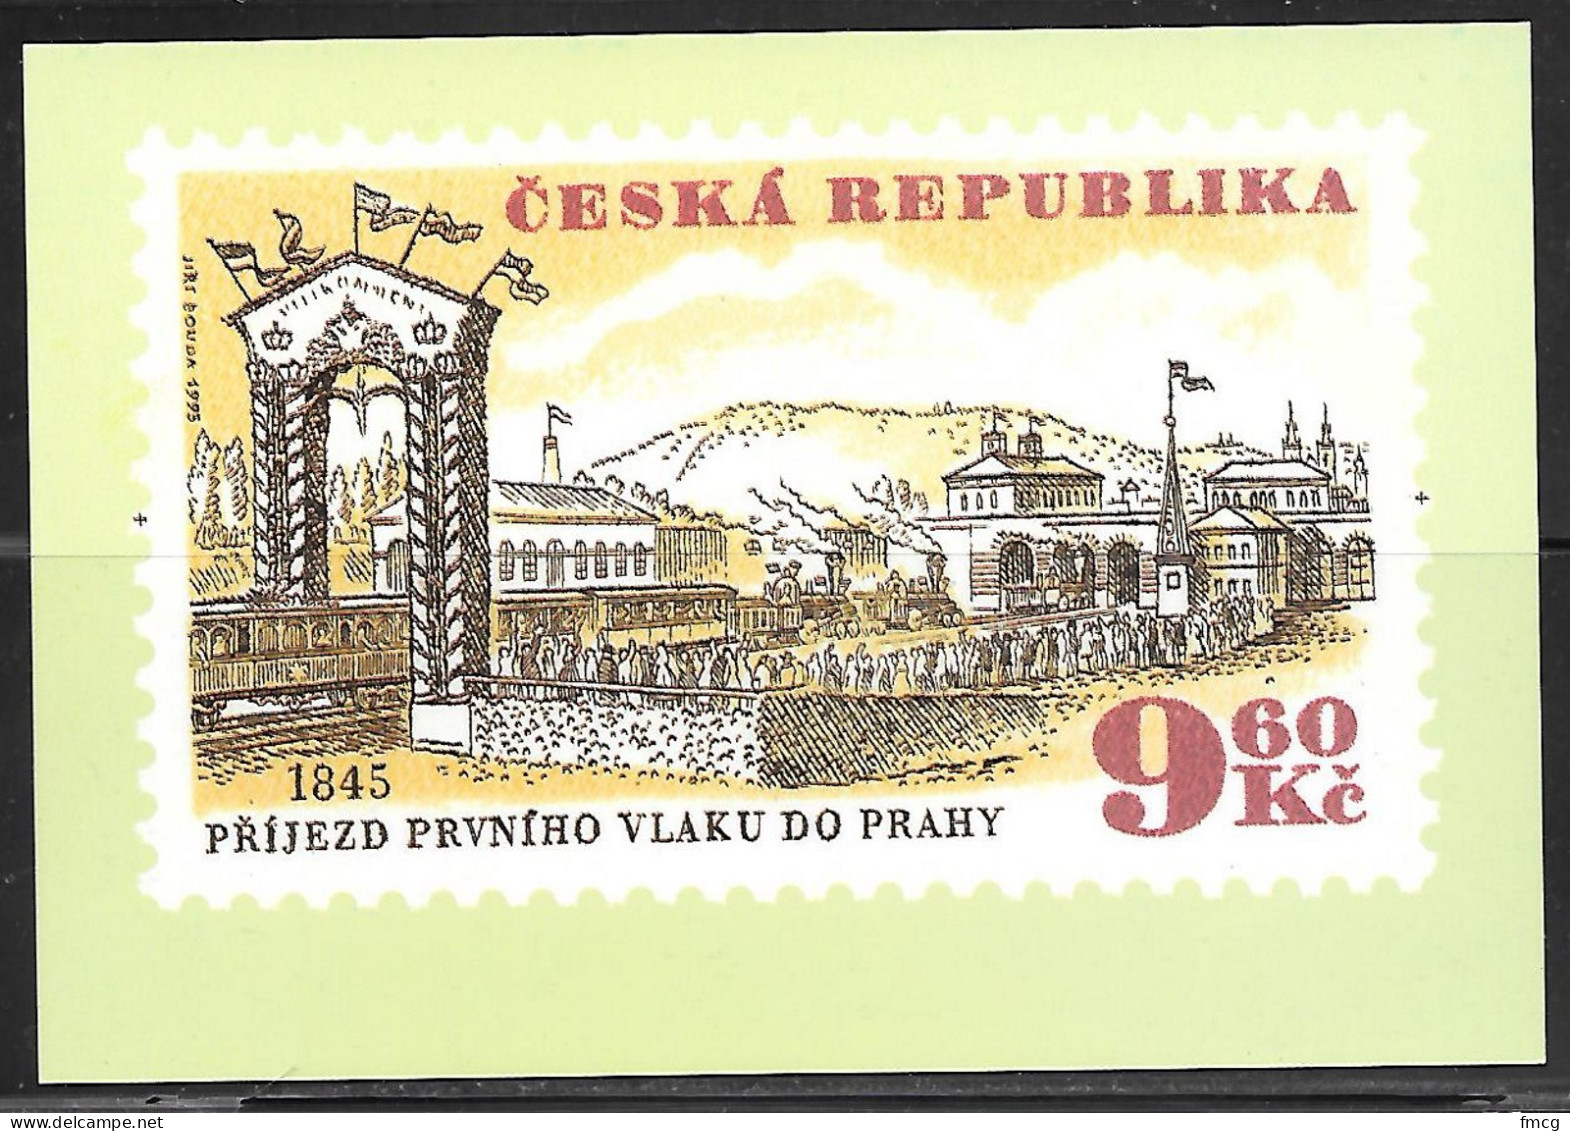 Czech Republic, 1995, Railroad Stamp, 9.60kc, Unused    - Czech Republic